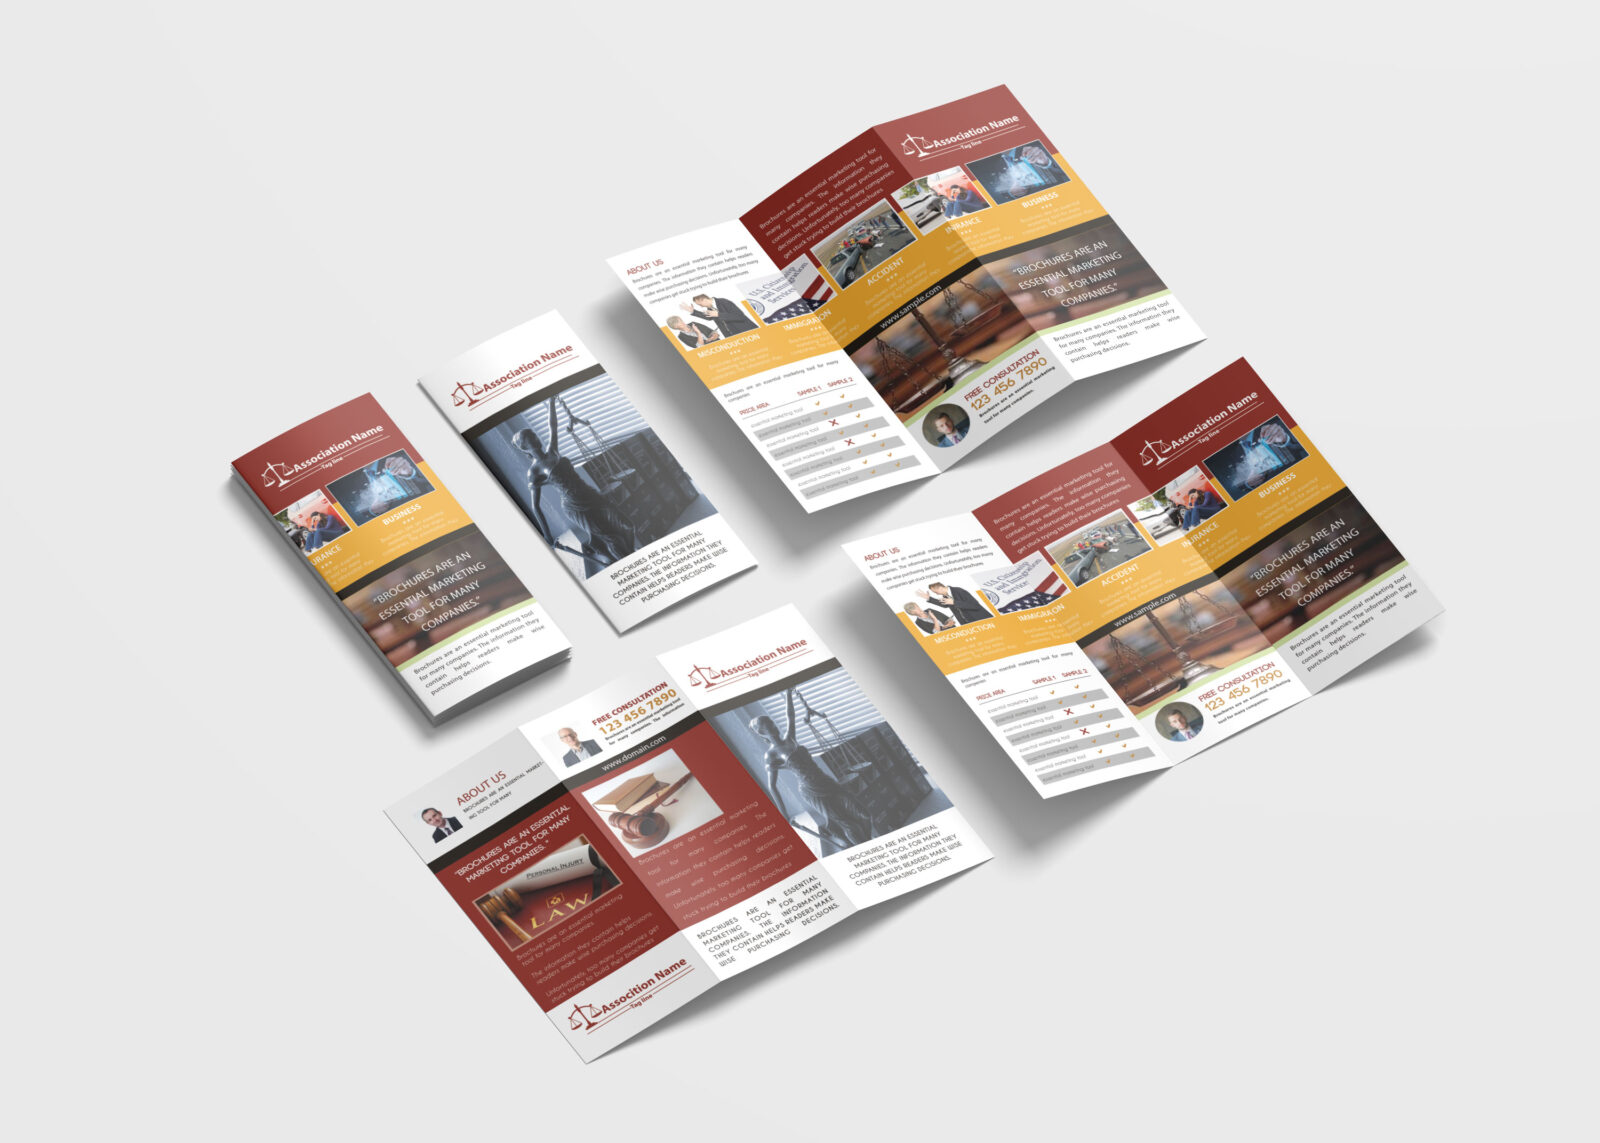 Law Tri-Fold Brochure Design Template